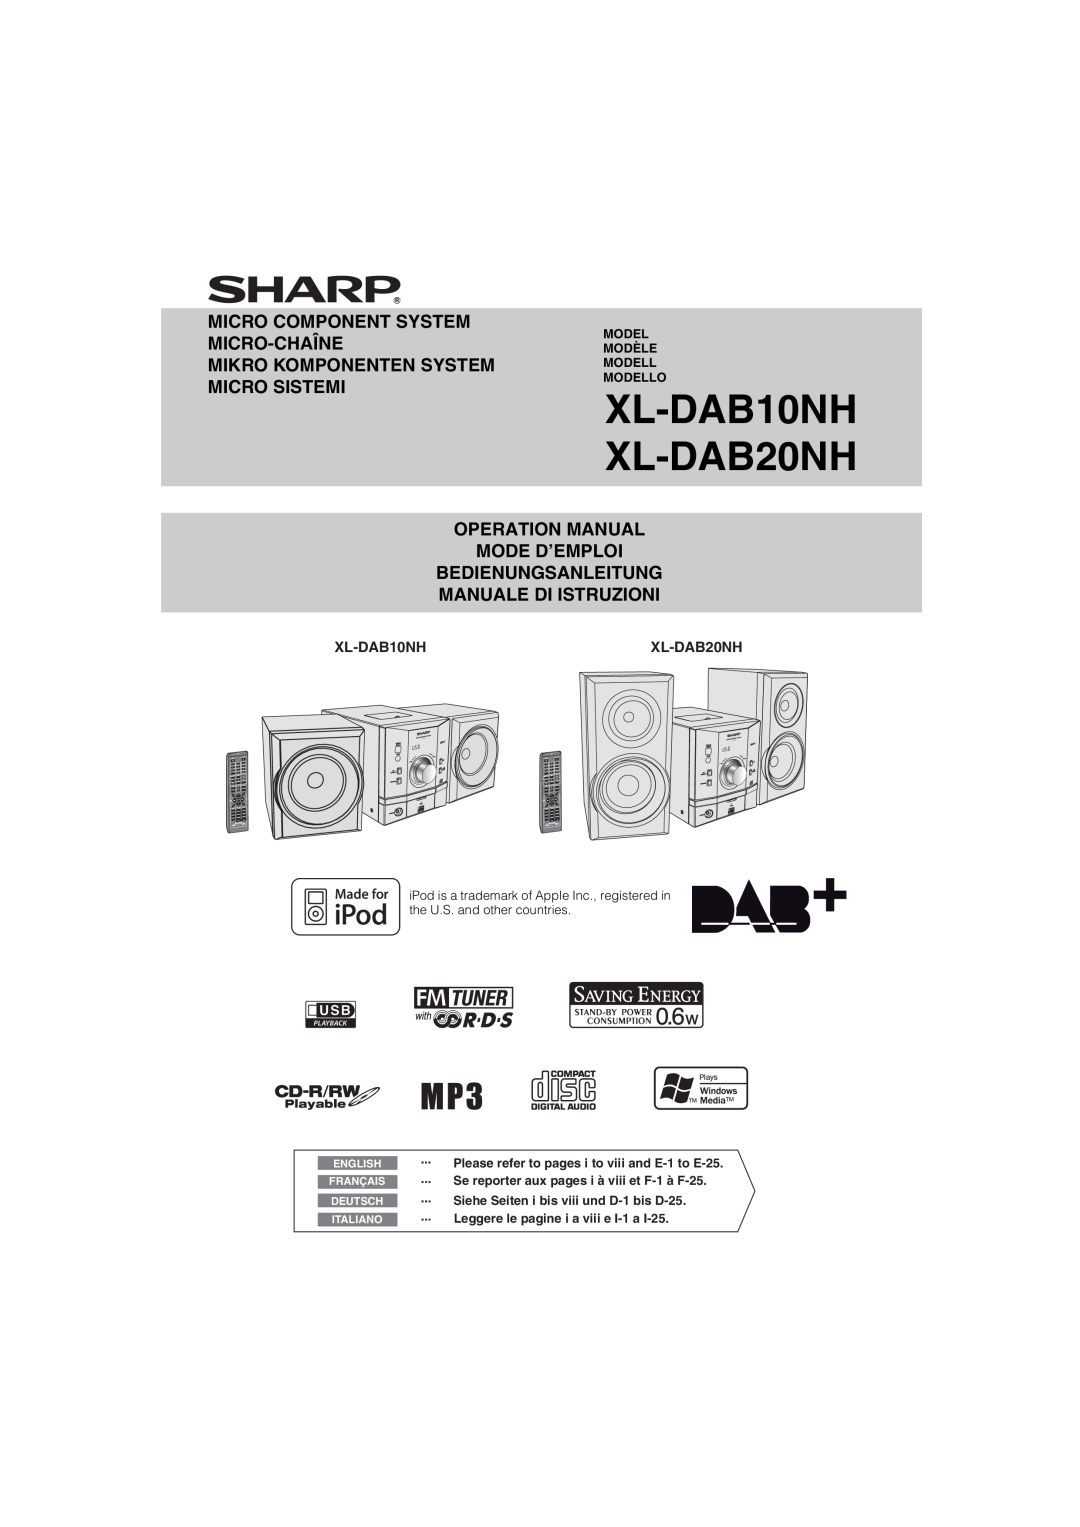 Sharp XL-DAB10NH operation manual Micro Component System Micro-Chaîne, Mikro Komponenten System Micro Sistemi, XL-DAB20NH 